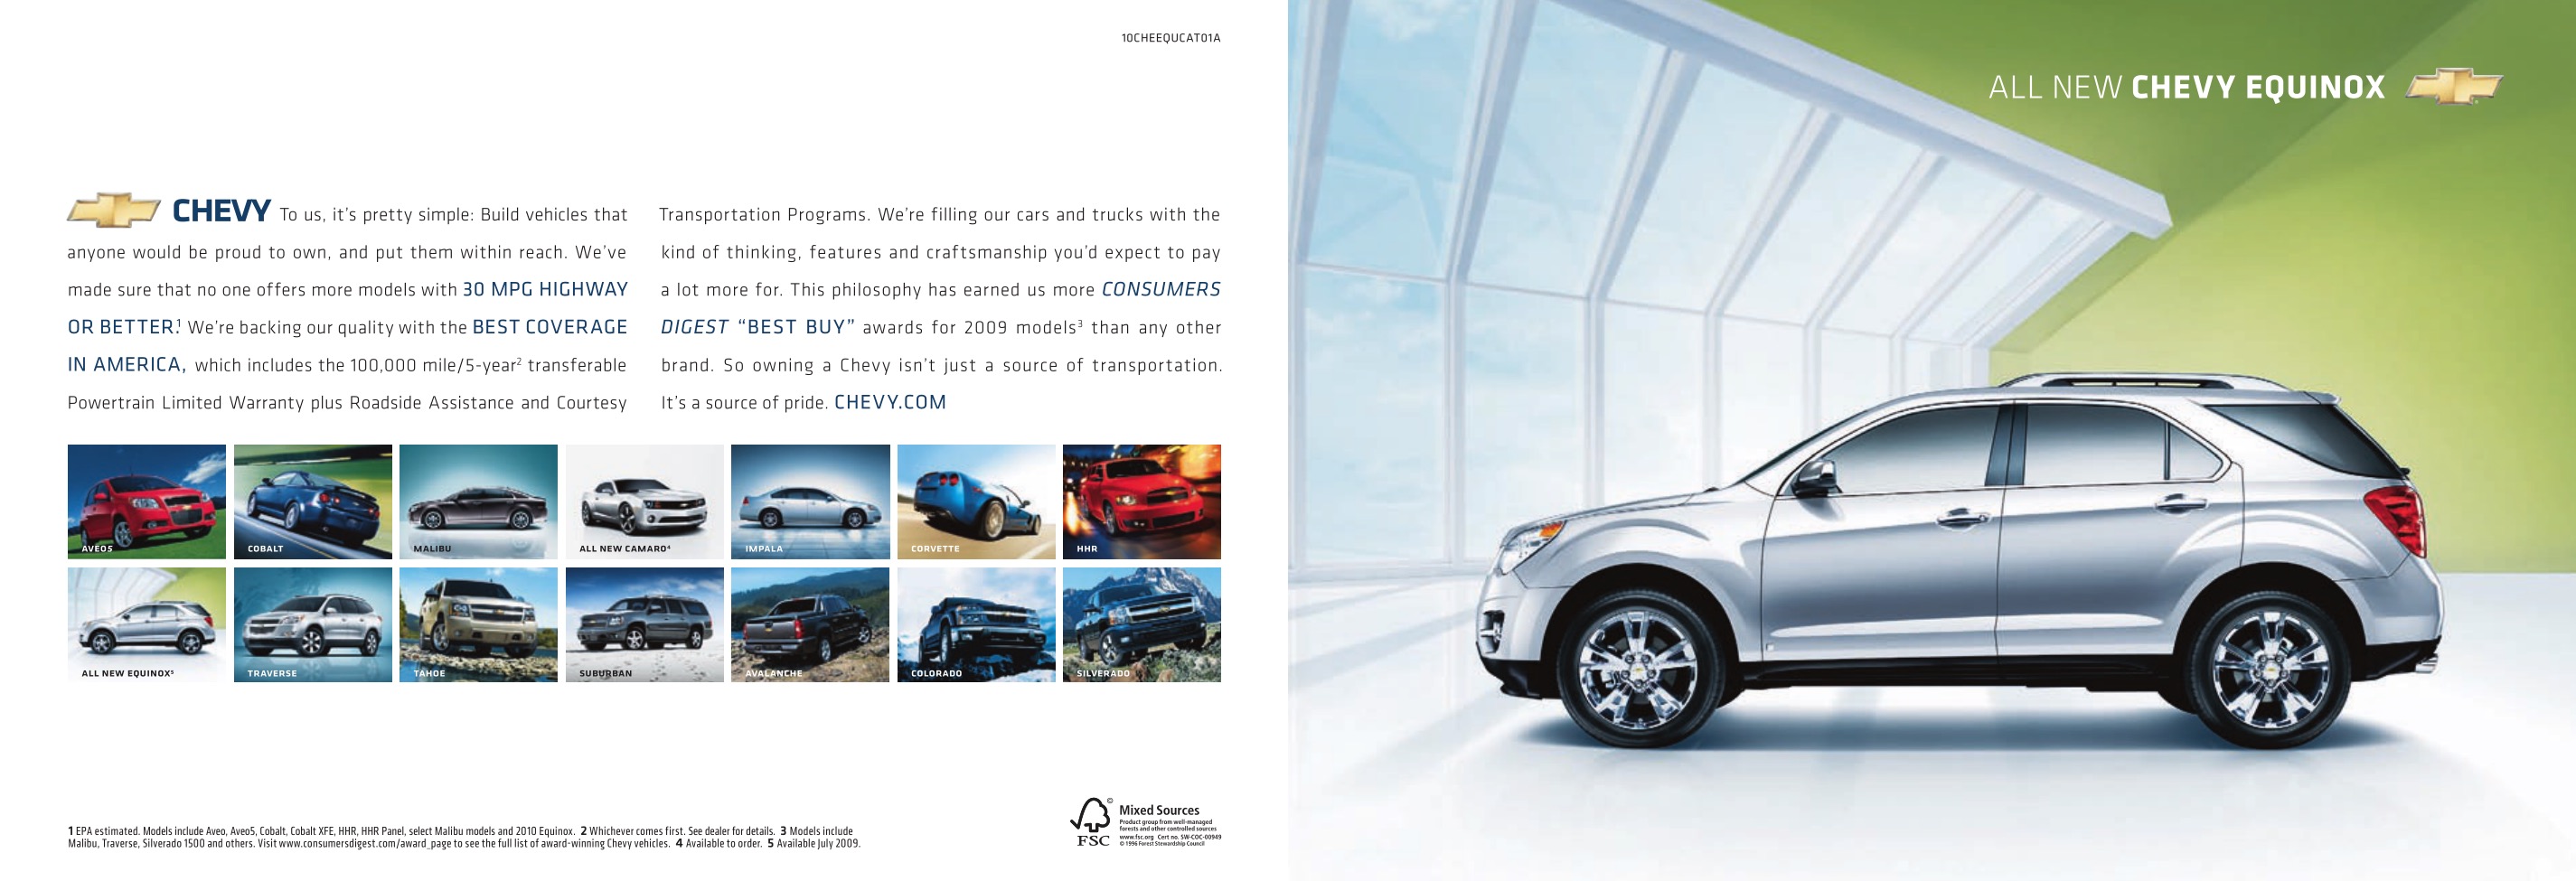 2010 Chevrolet Equinox Brochure